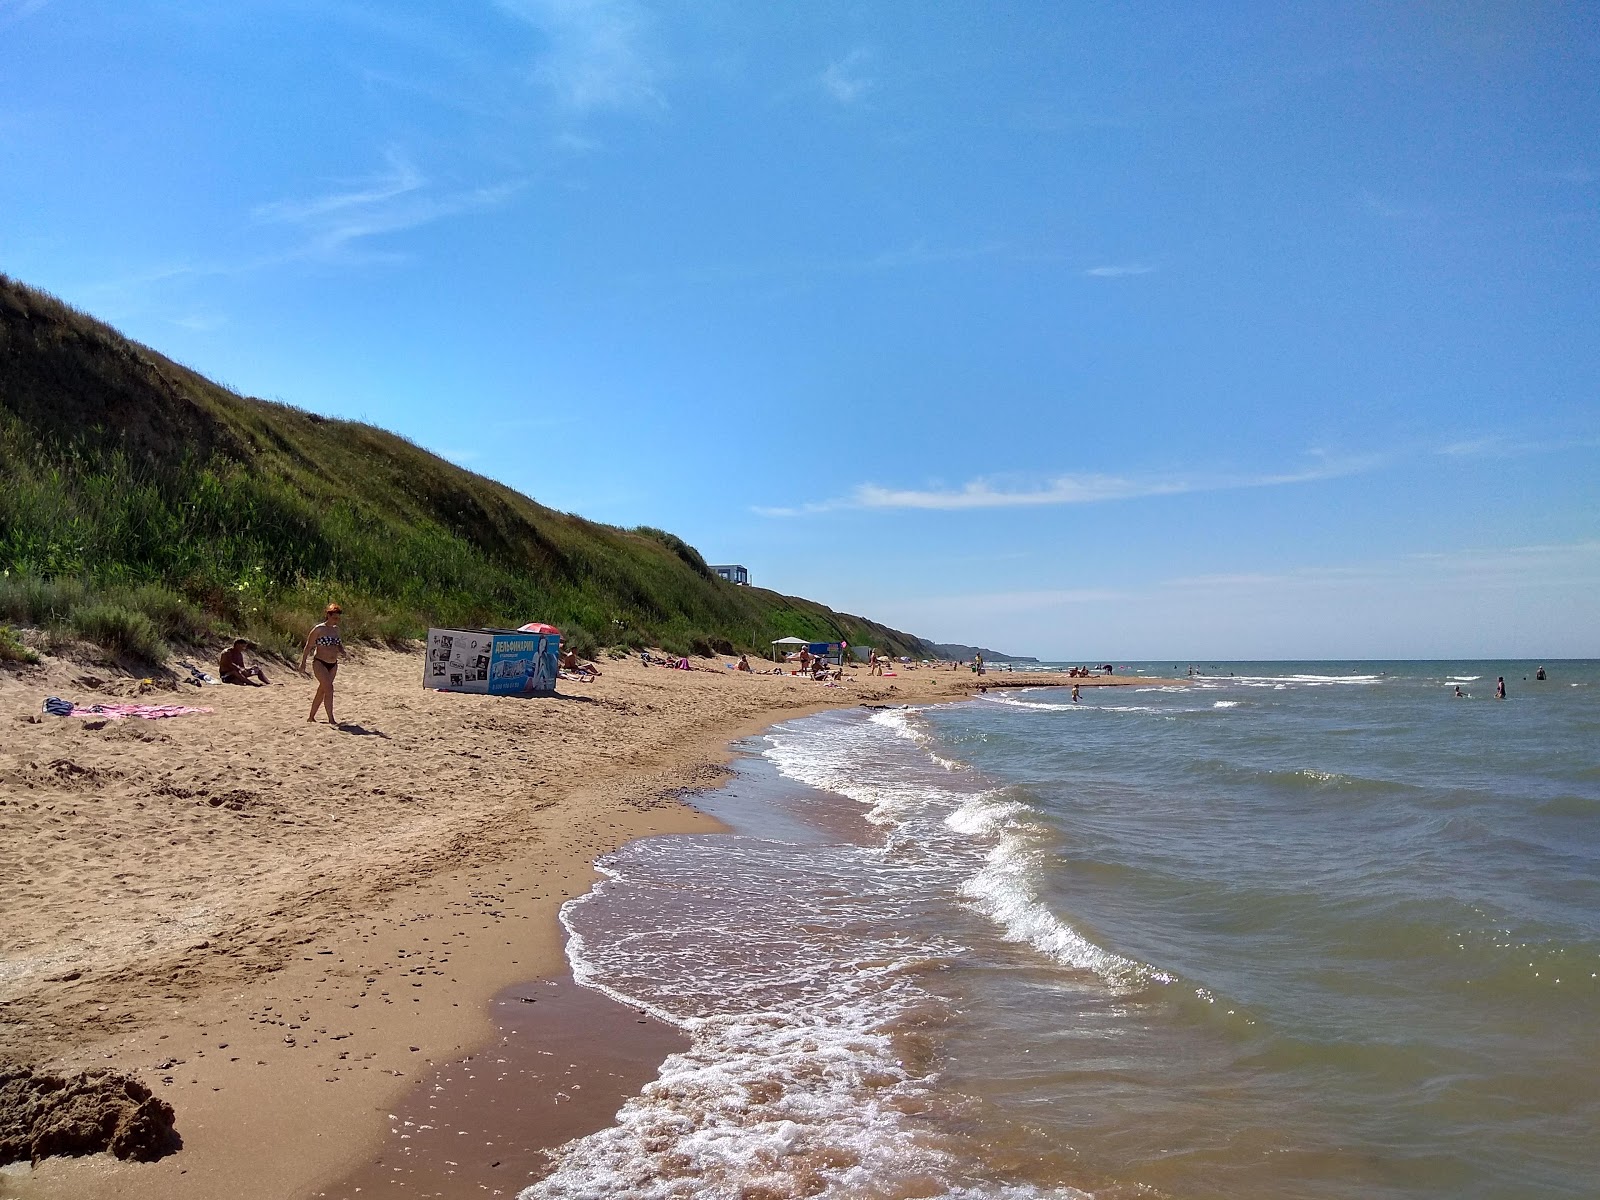 Fotografie cu Kuchugury beach cu nivelul de curățenie in medie